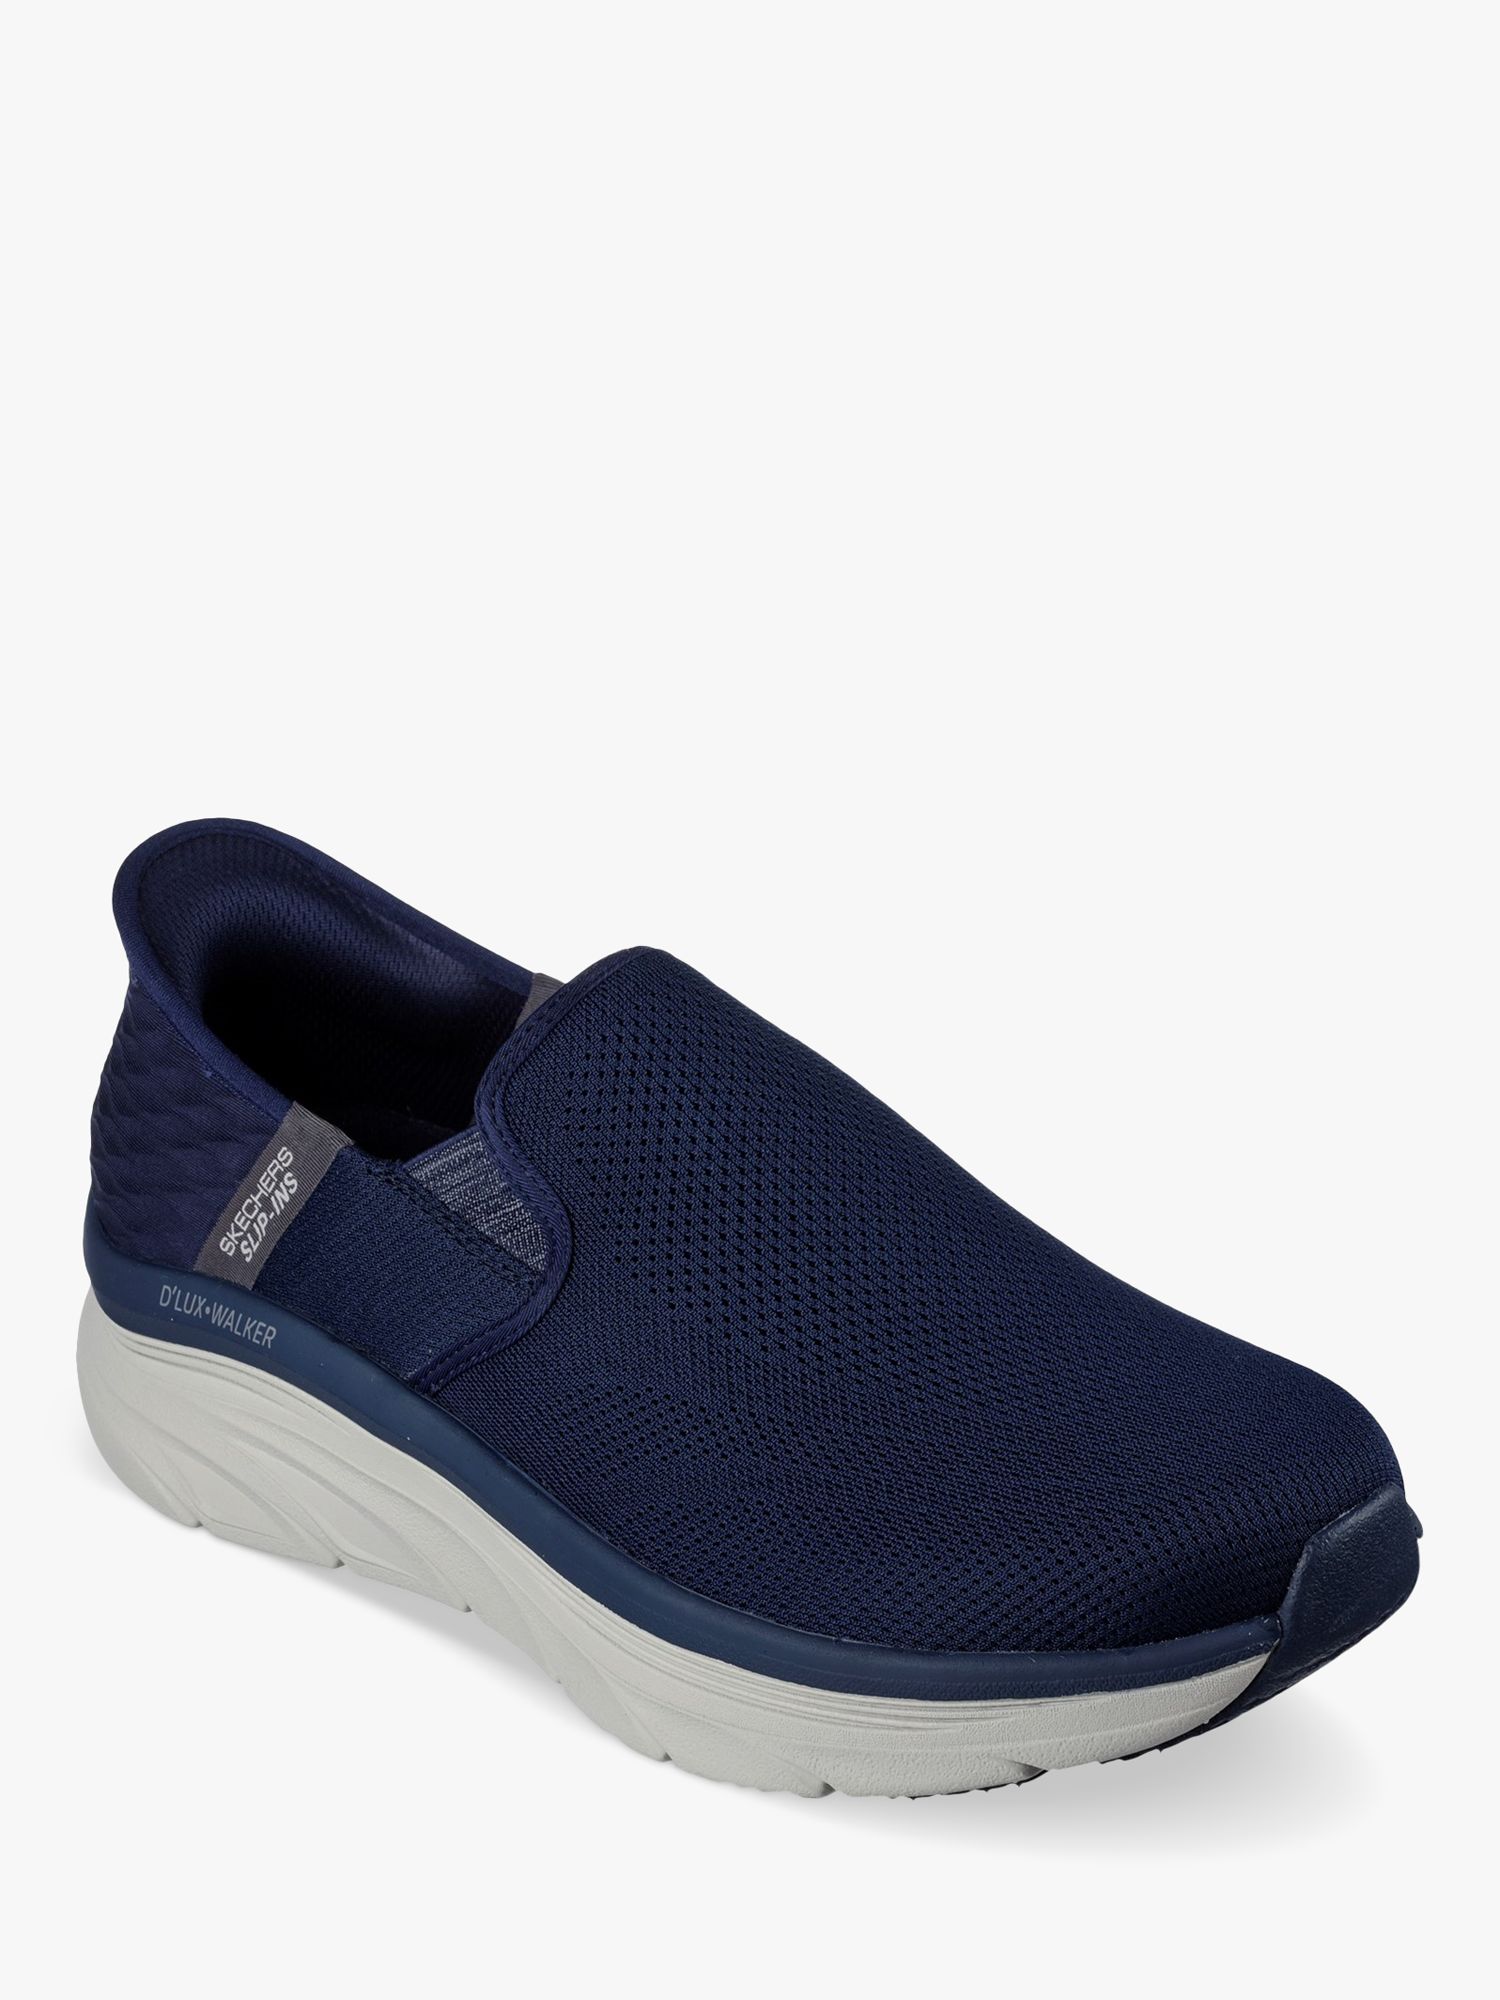 Skechers D'Lux Walker Orford Slip-On Shoes, Navy at John Lewis & Partners